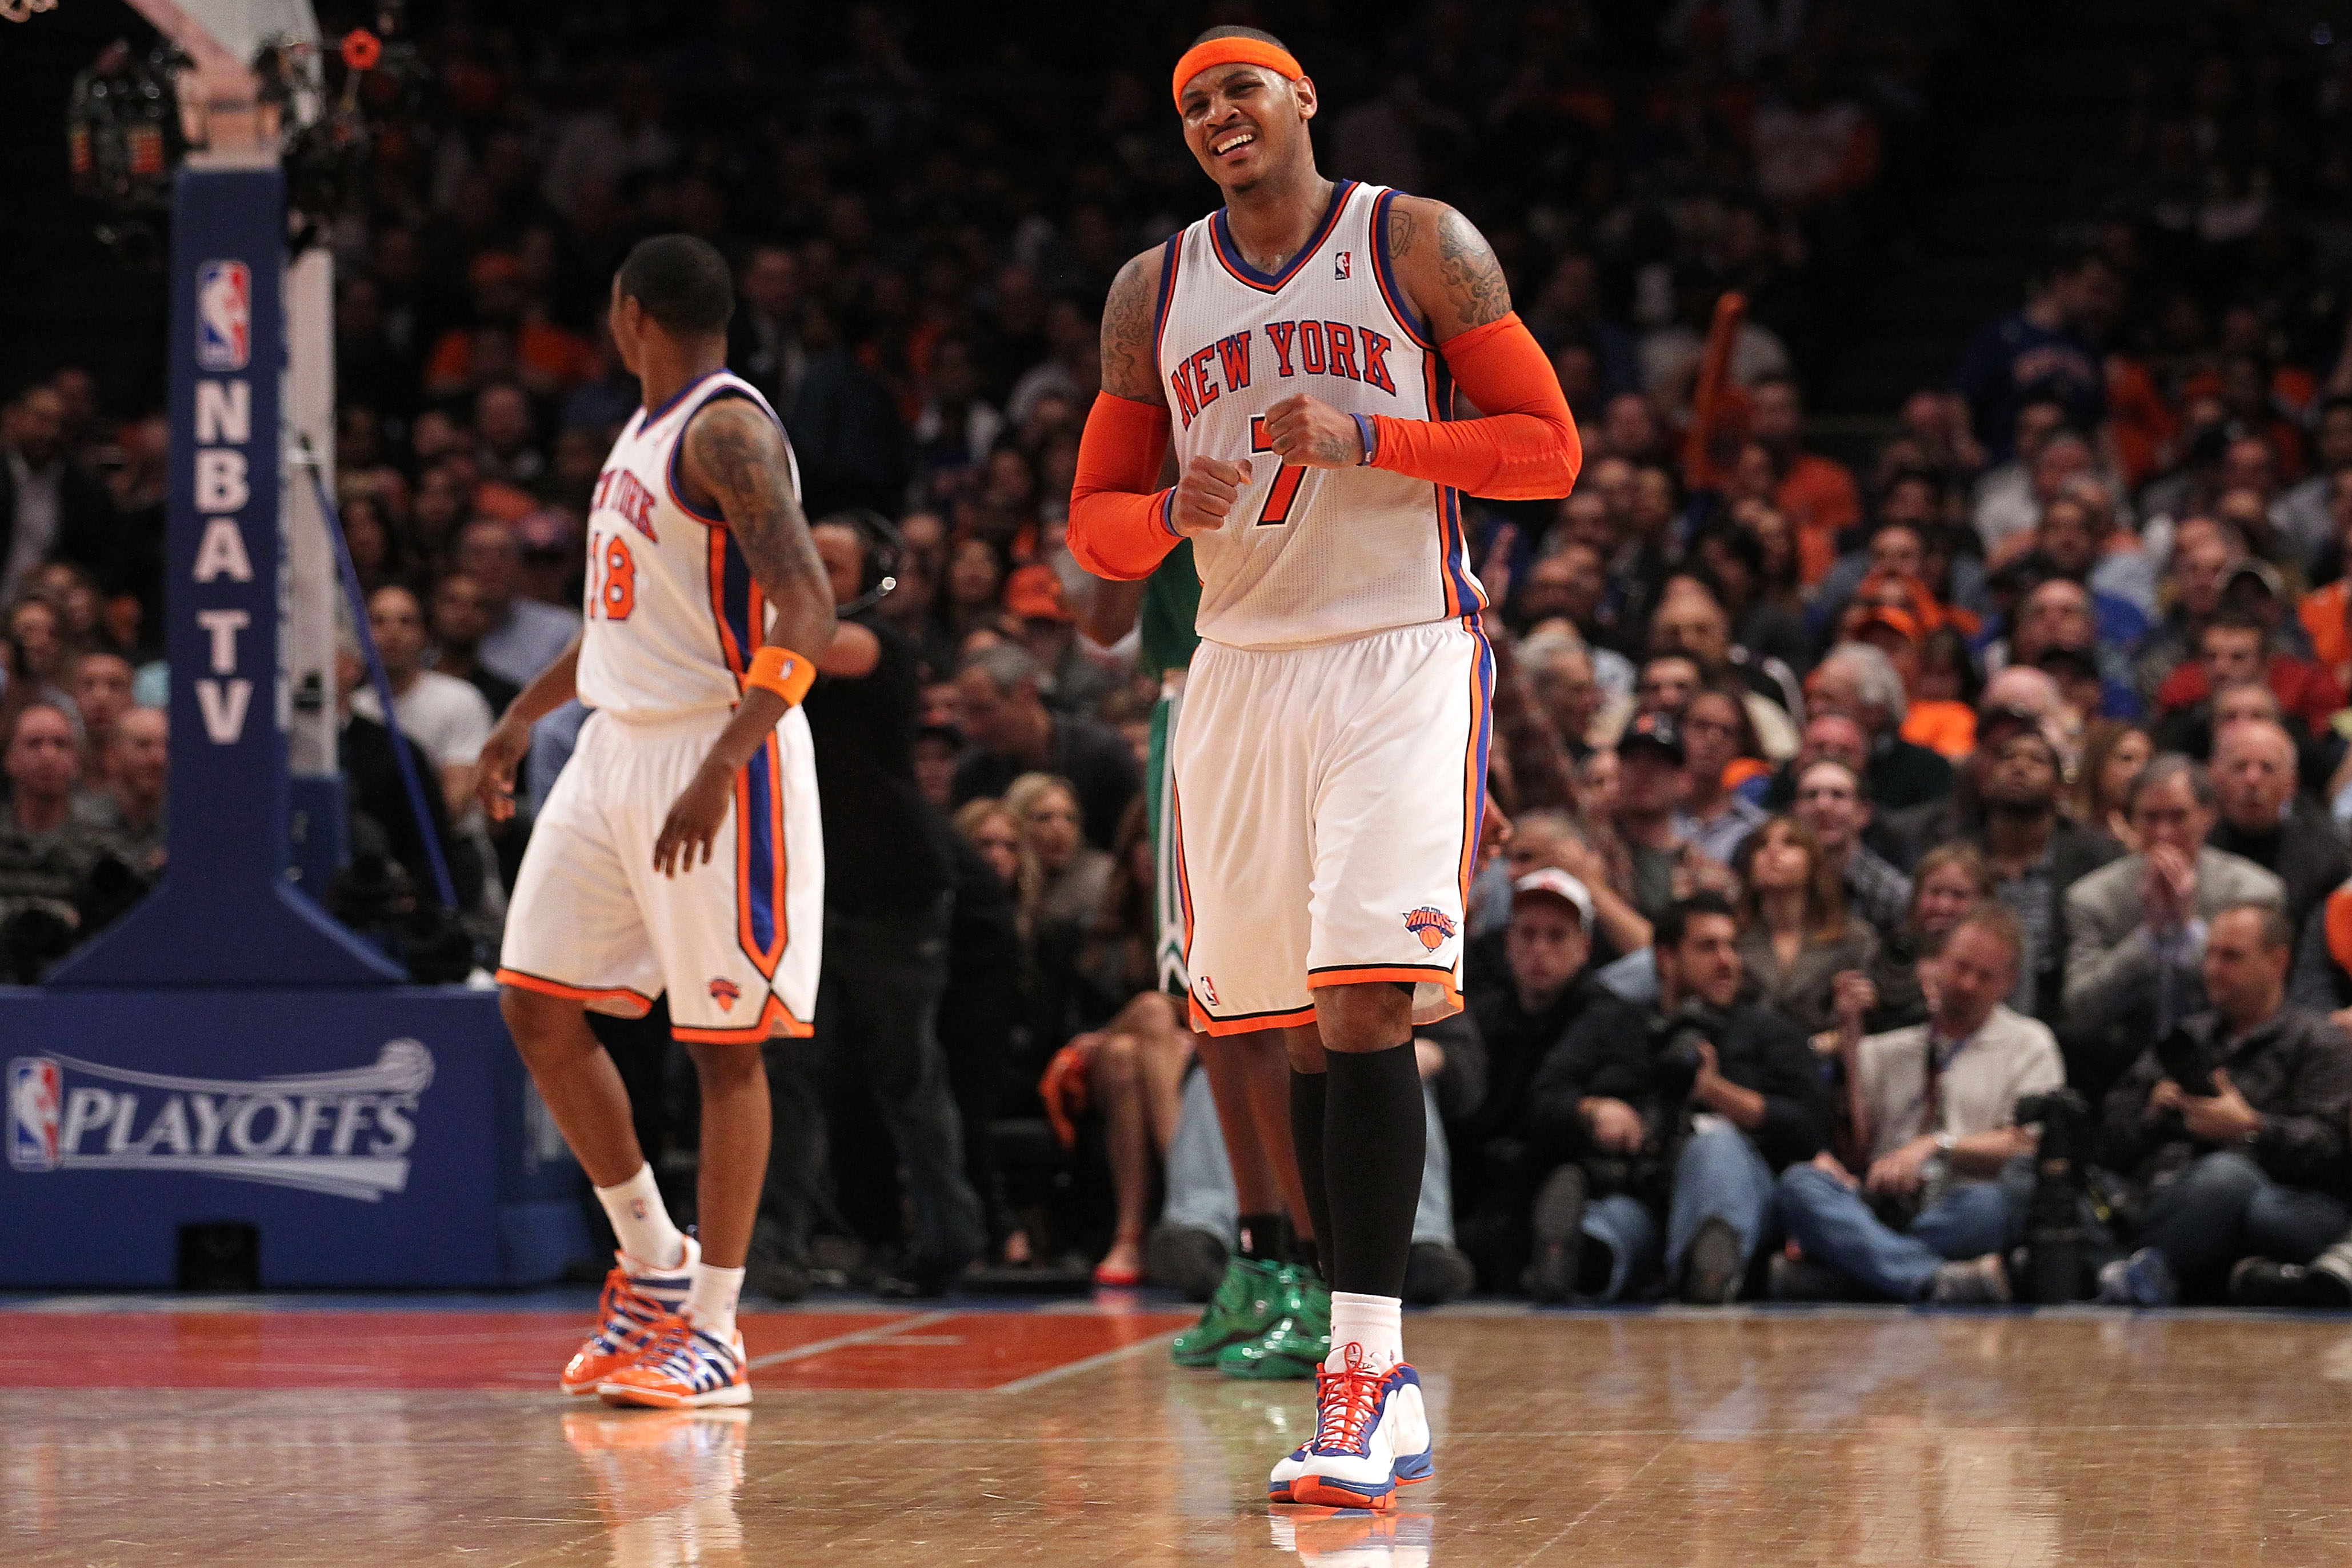 NBA PLAYOFFS: New York Knicks' Carmelo Anthony downs Boston